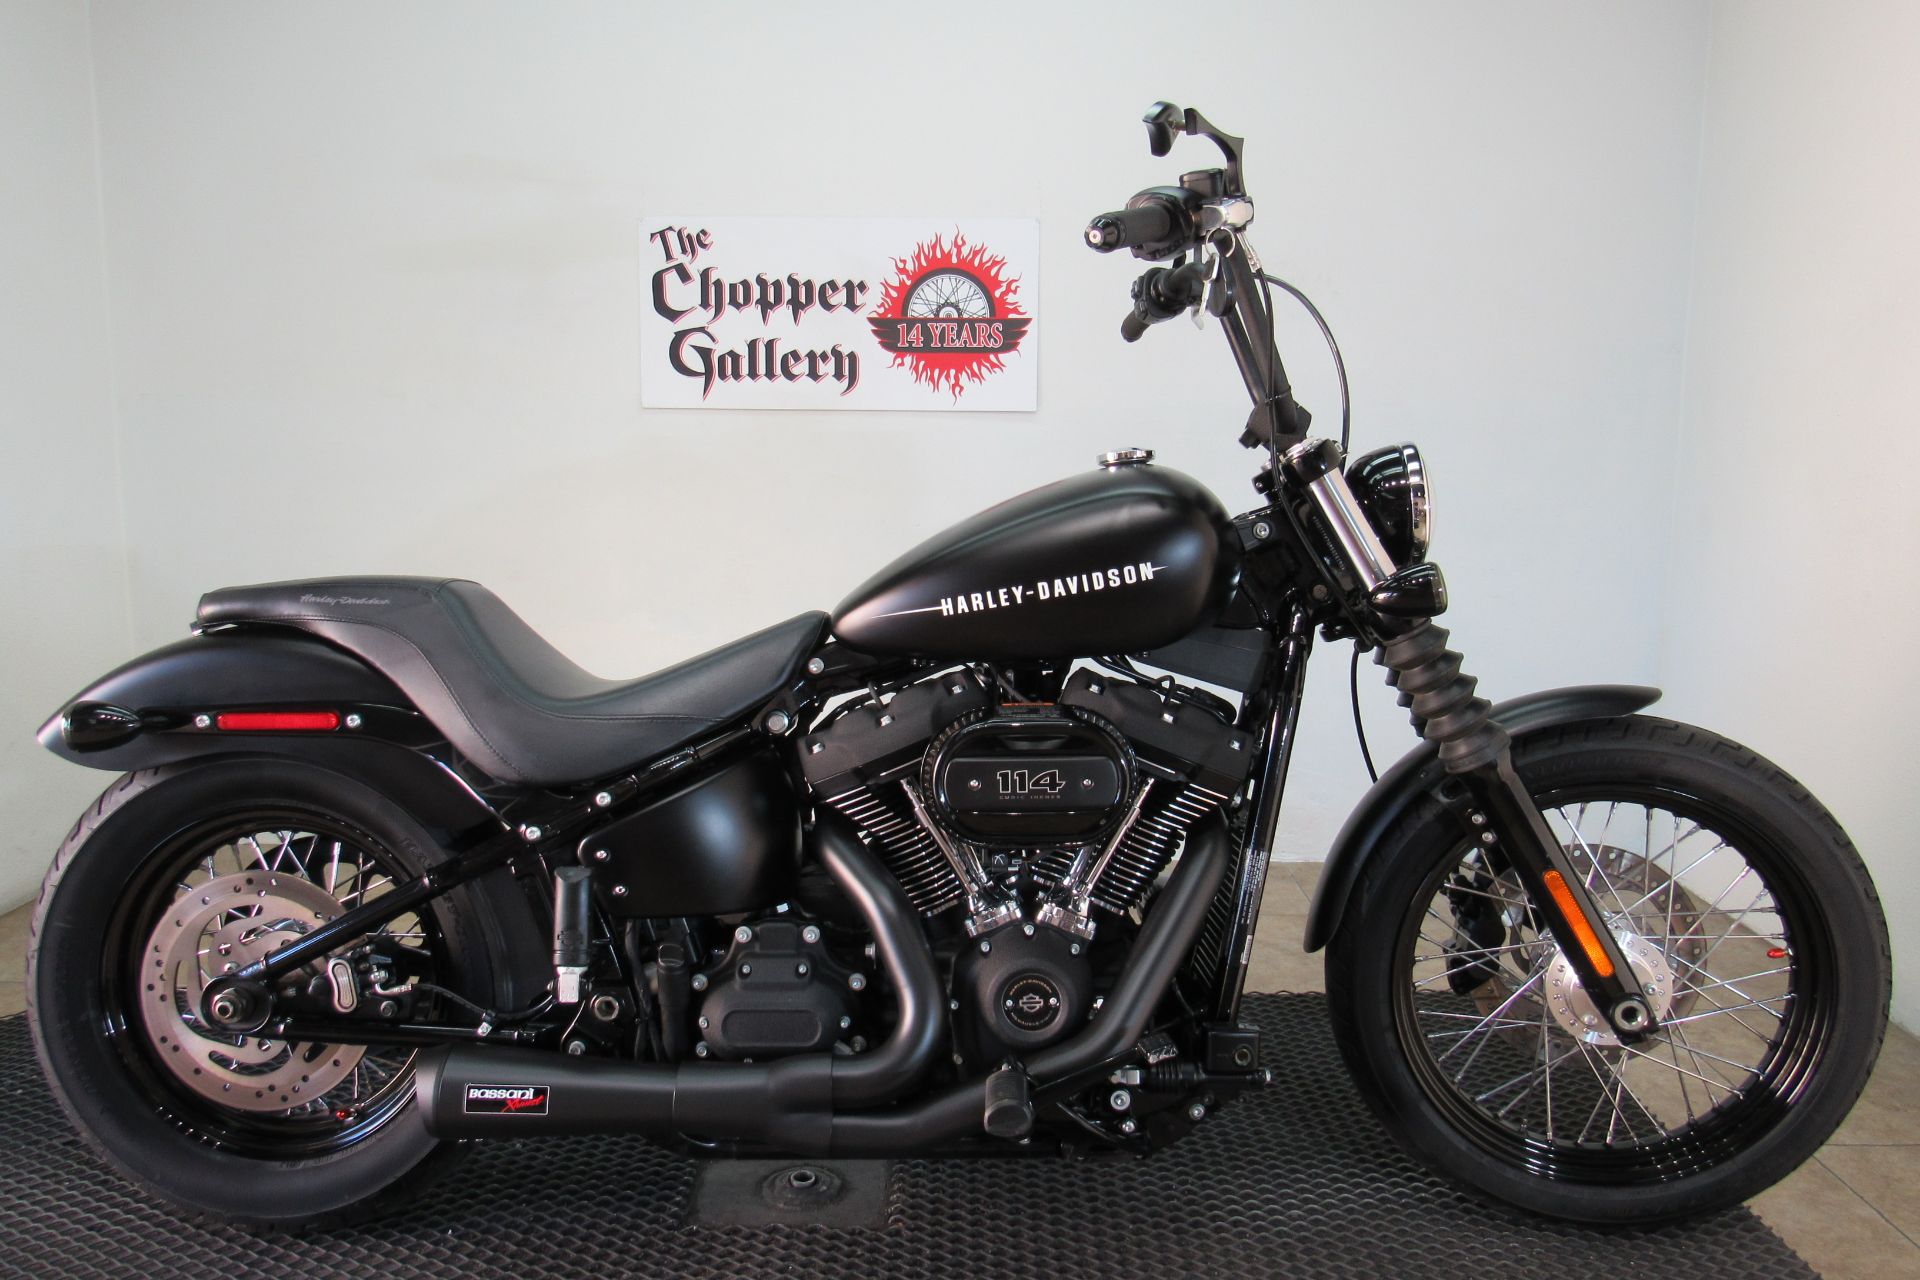 2021 Harley-Davidson Street Bob® 114 in Temecula, California - Photo 1